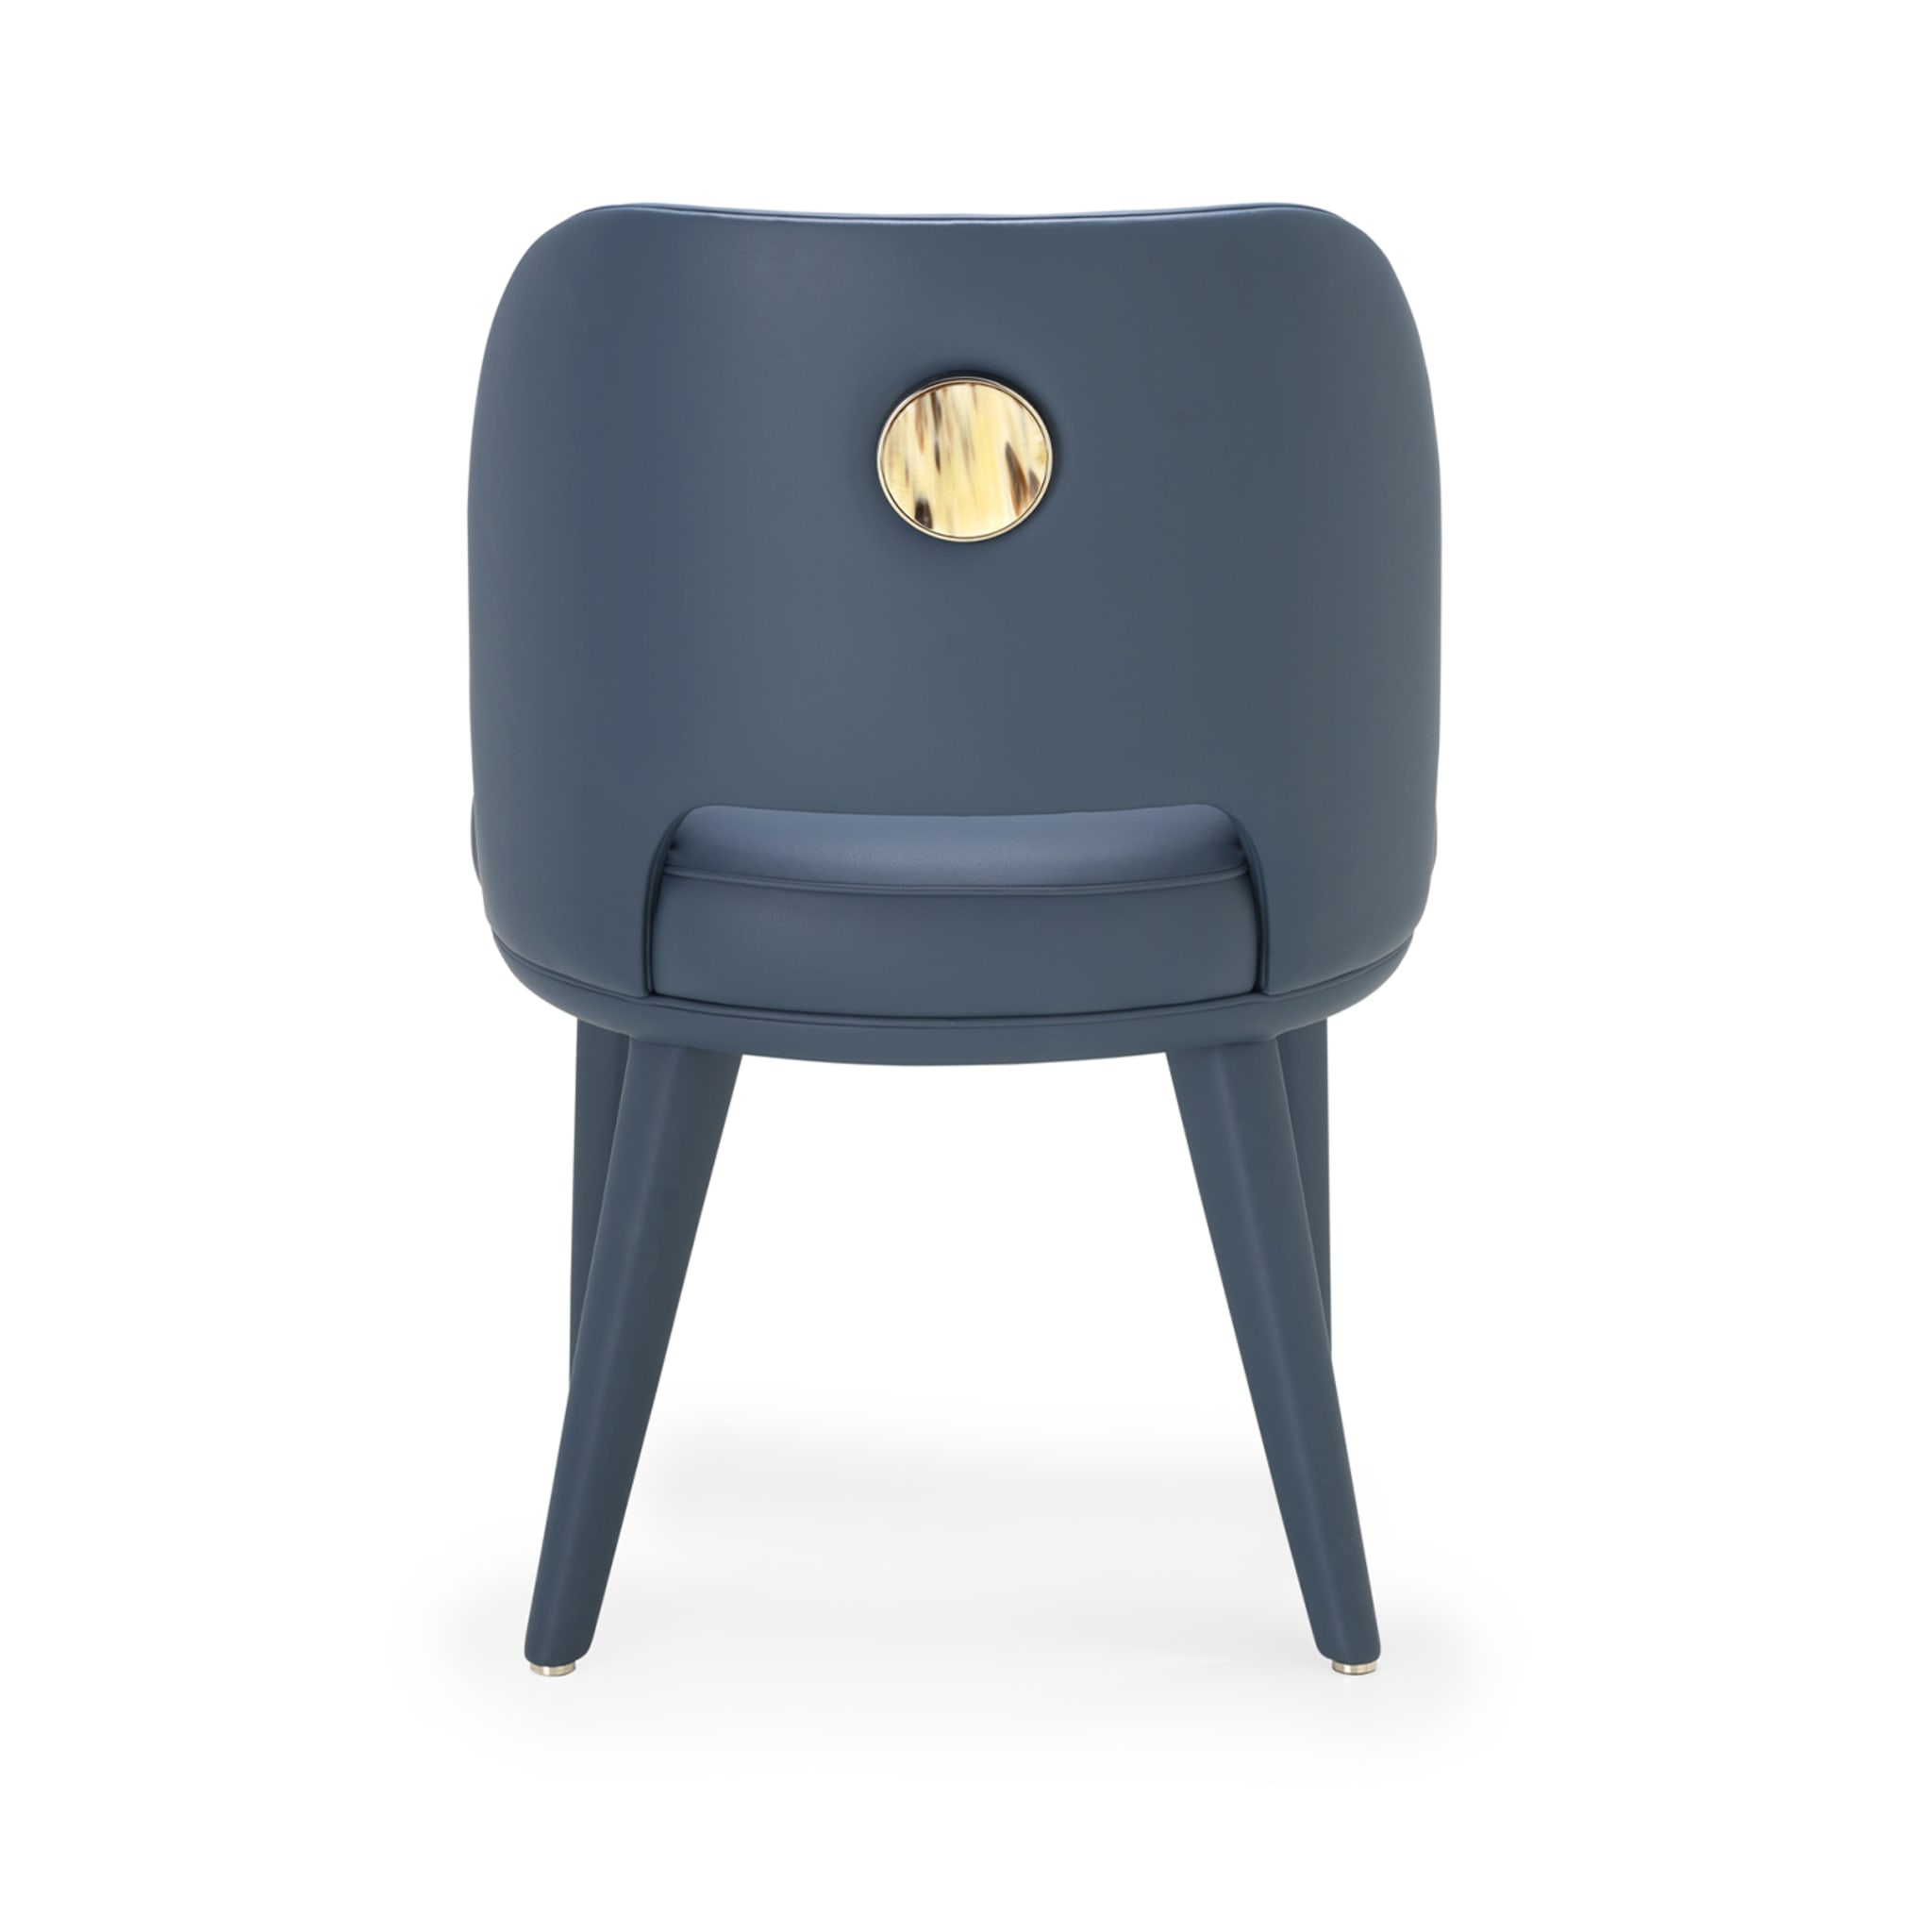 PENELOPE blue chair - Alternative view 4